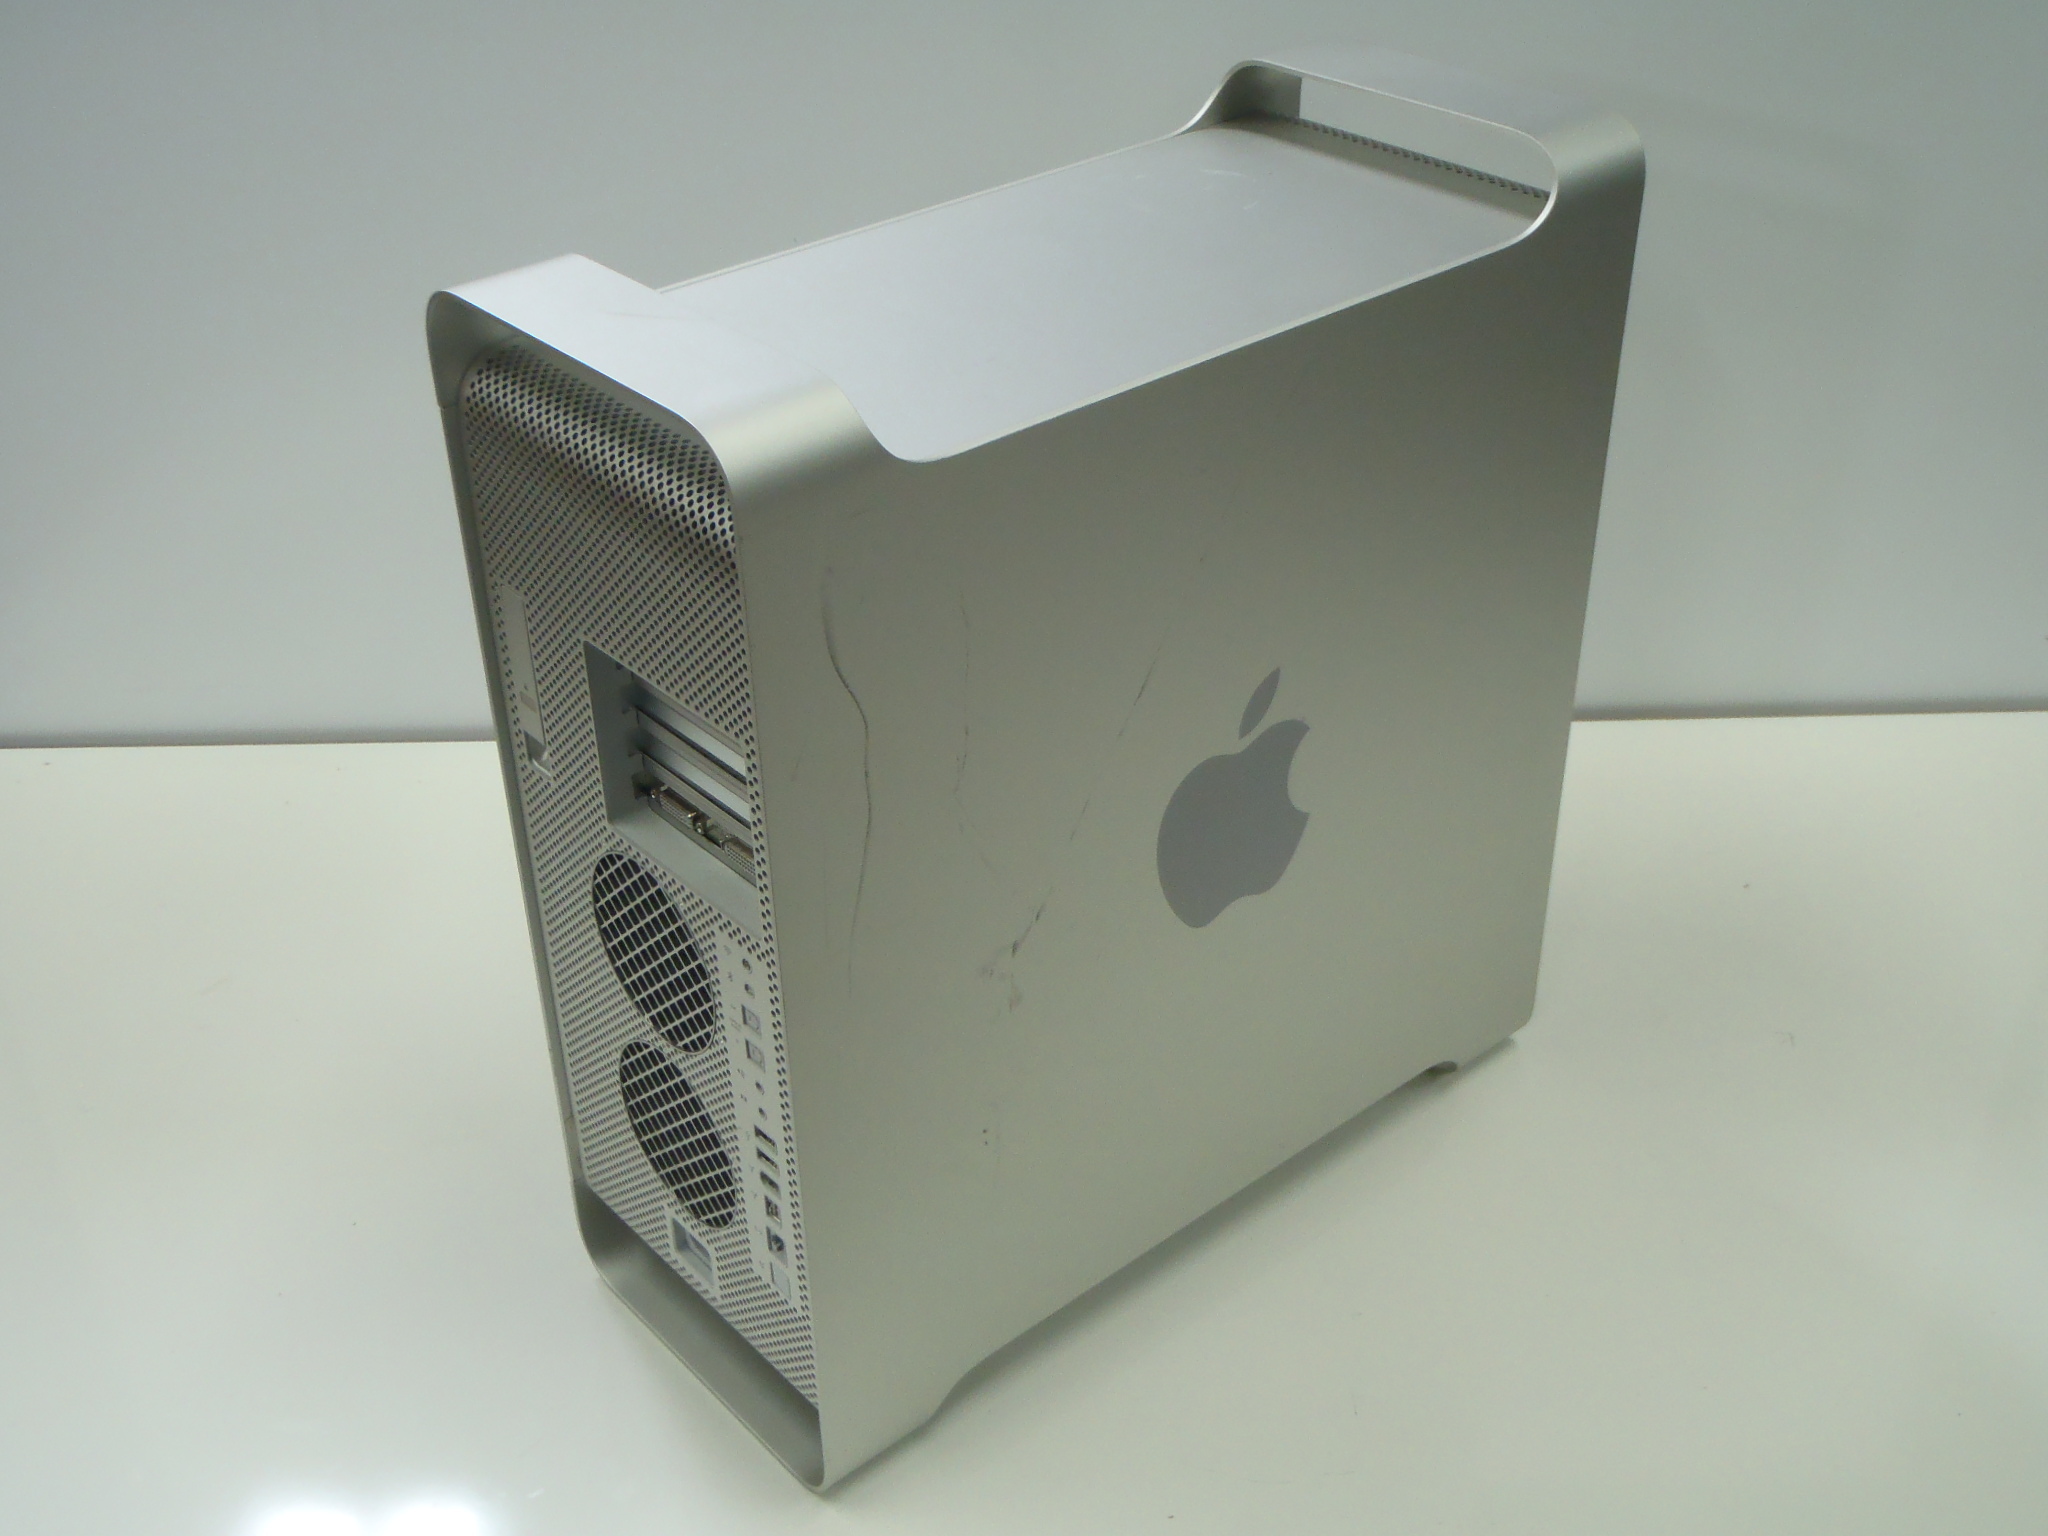 Power mac g5 tower